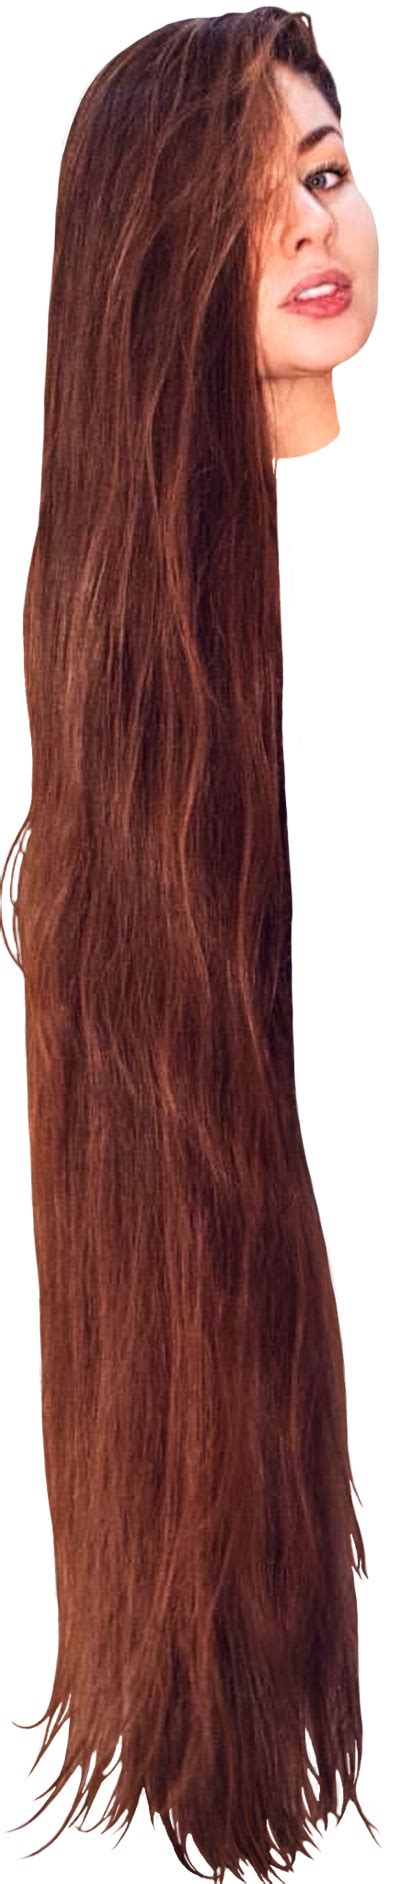 Girl Hair Brunette Straight Very Long 6 By Pngtransparency On Deviantart